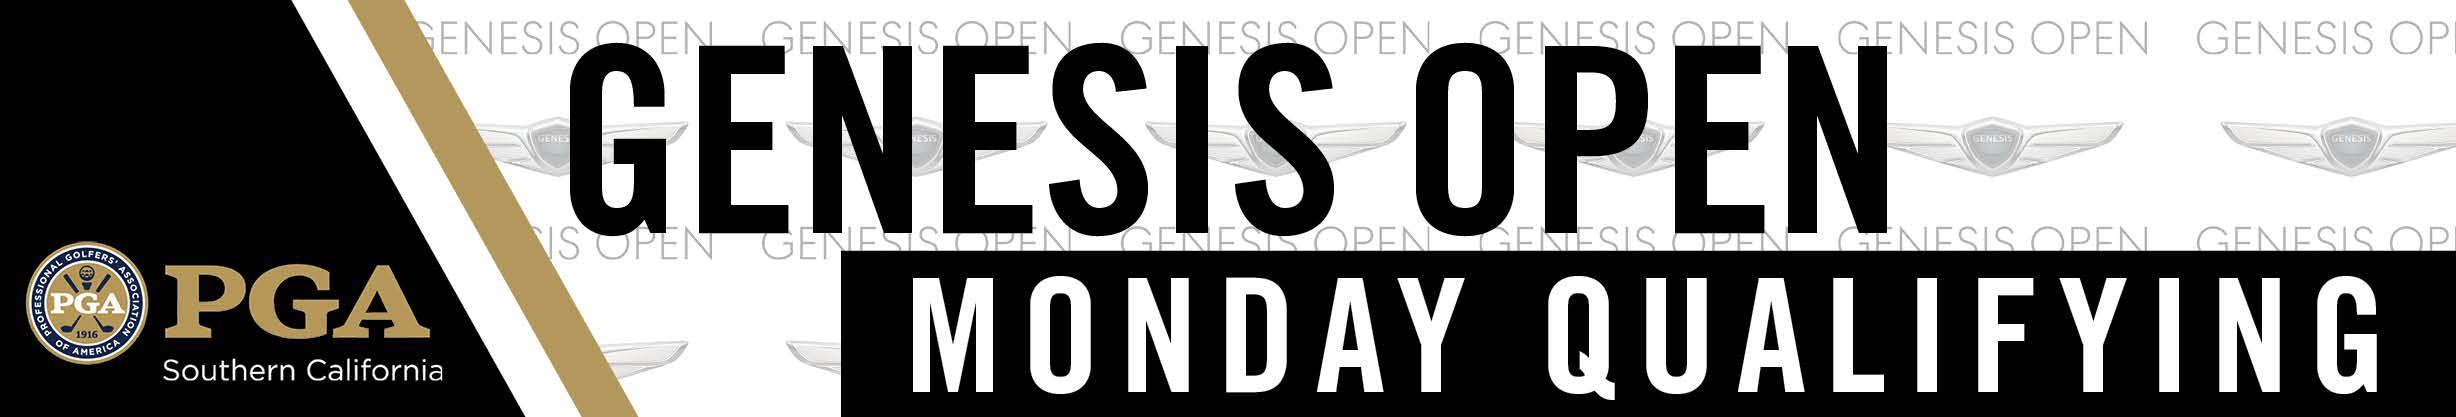 Genesis Open Logo - Genesis Open Event Qualifier California PGA